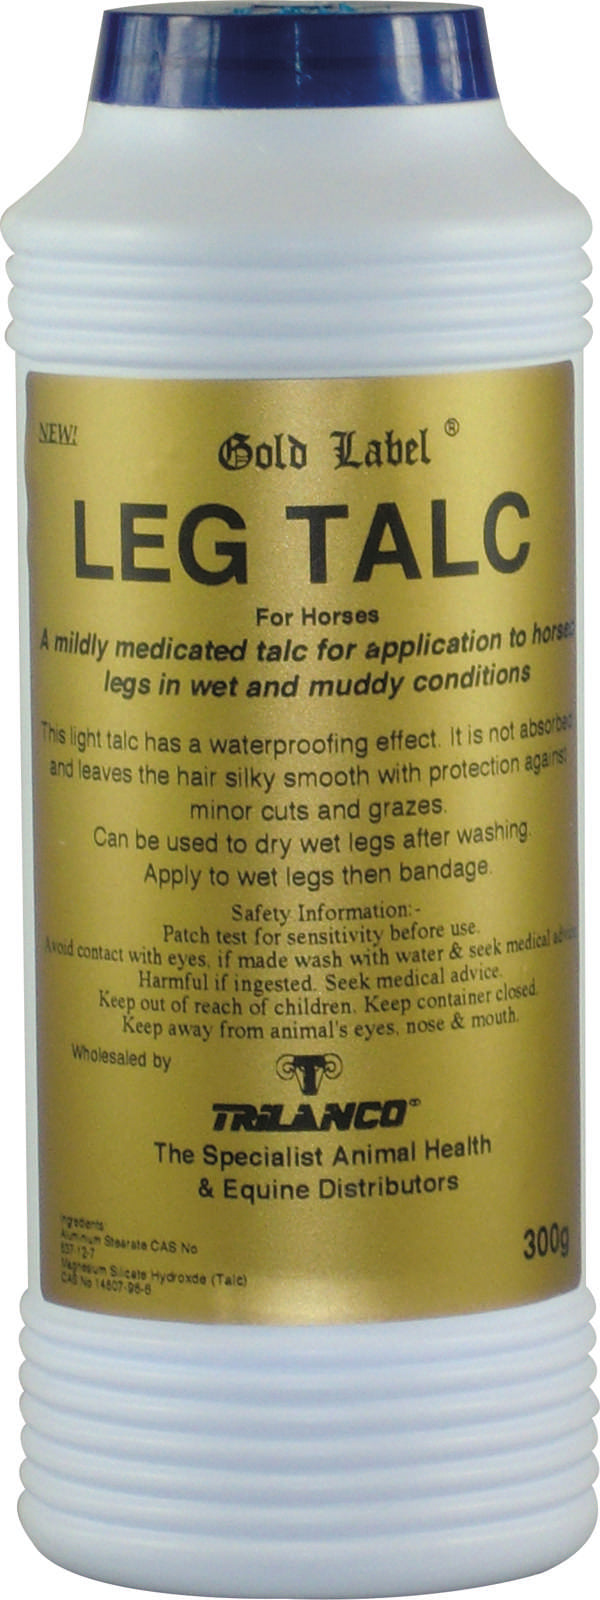 Gold Label Leg Talc 300g